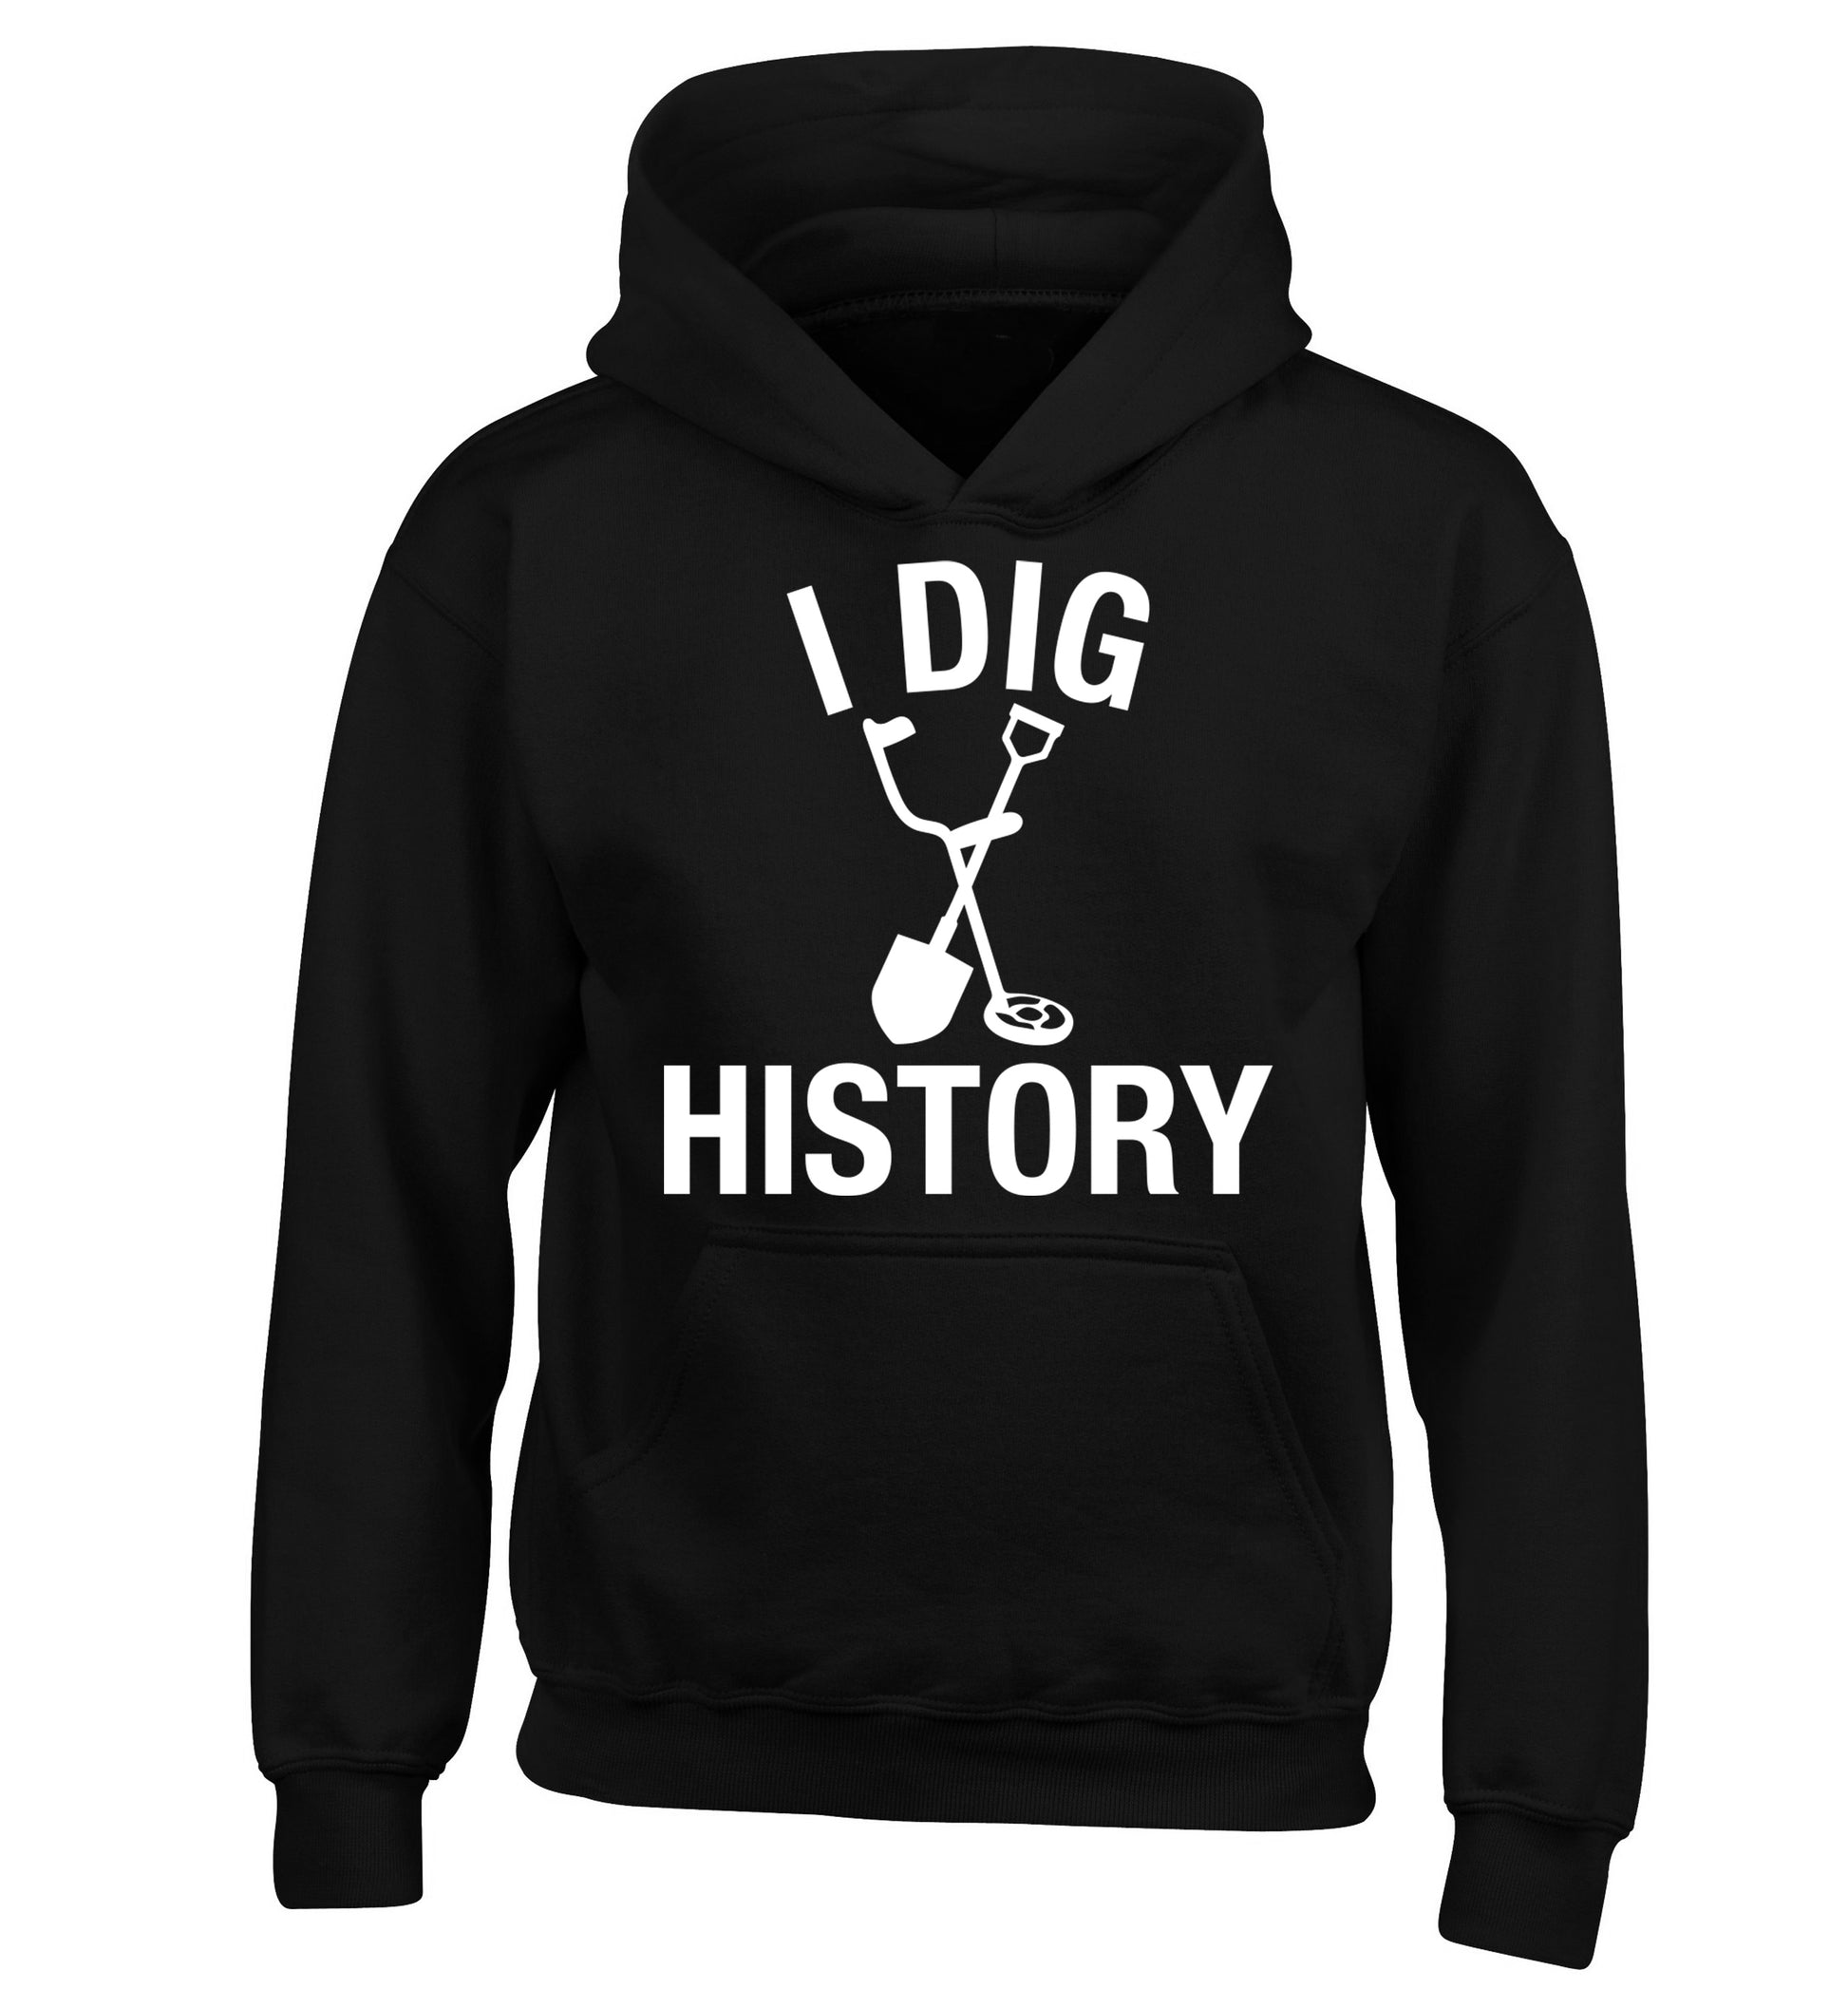 I dig history children's black hoodie 12-13 Years